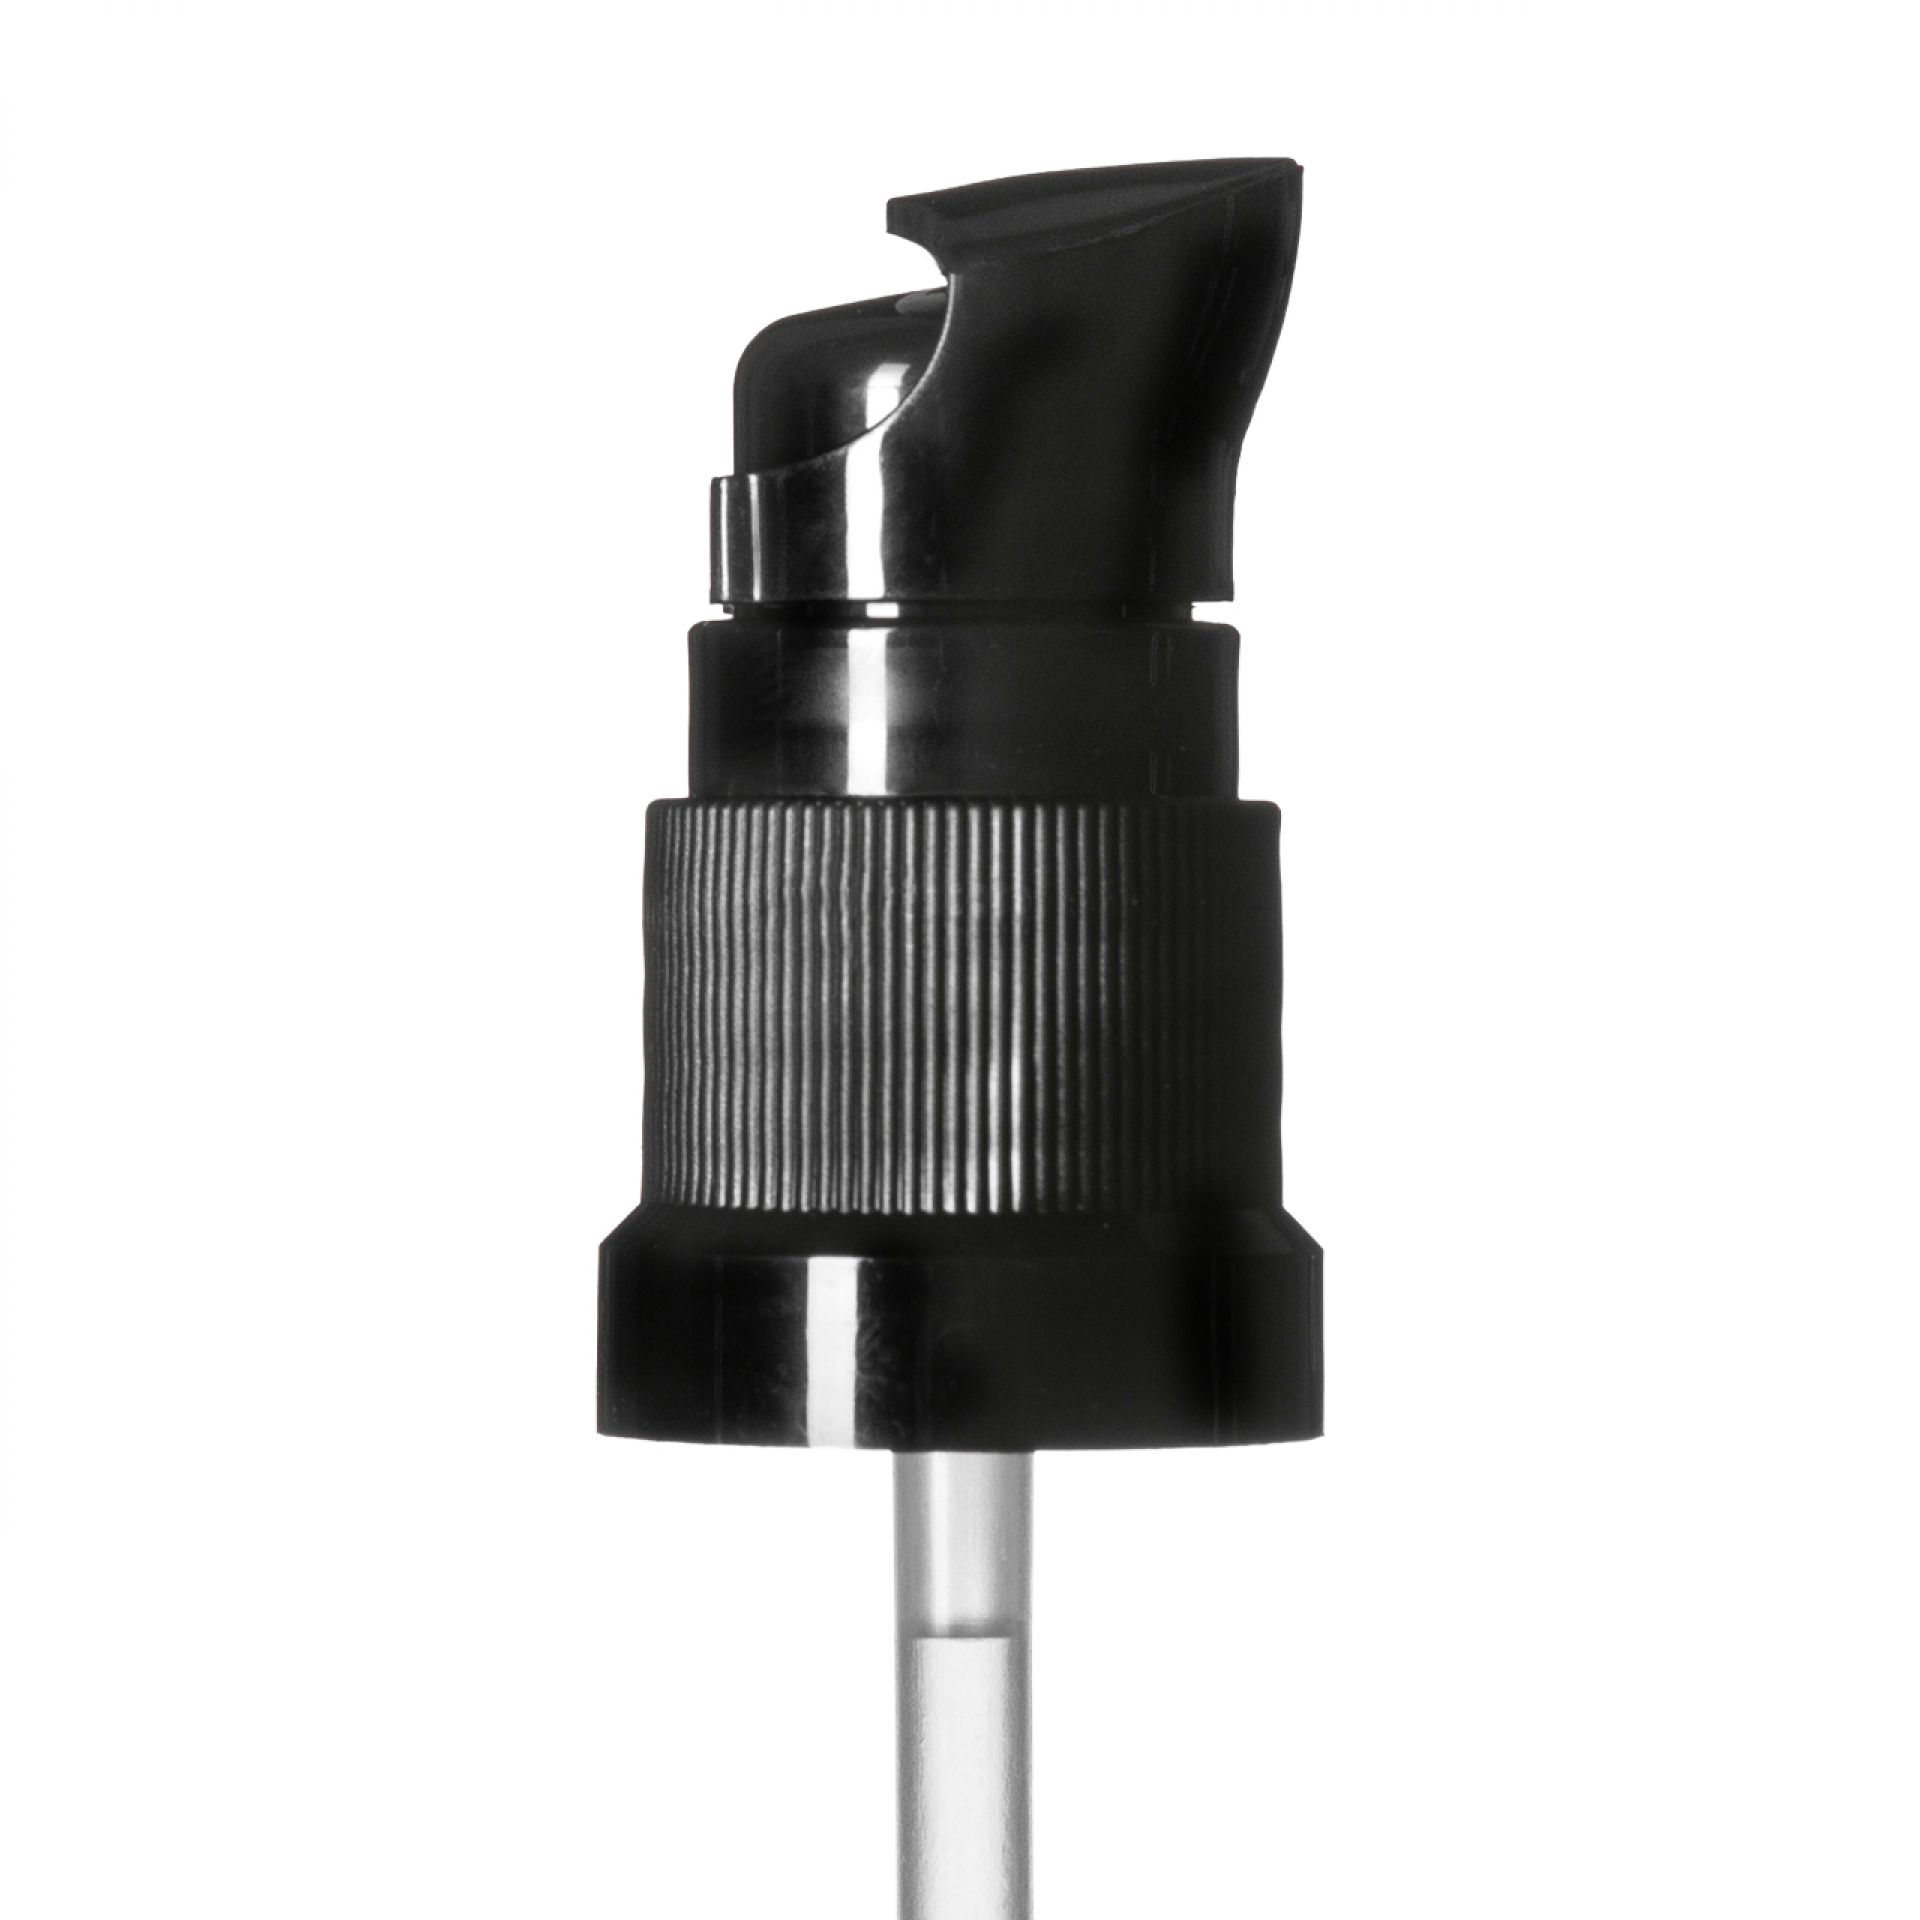 Lotion pump Metropolitan DIN18, PP, black, dose 0.10ml, black security clip (Ginger 5)